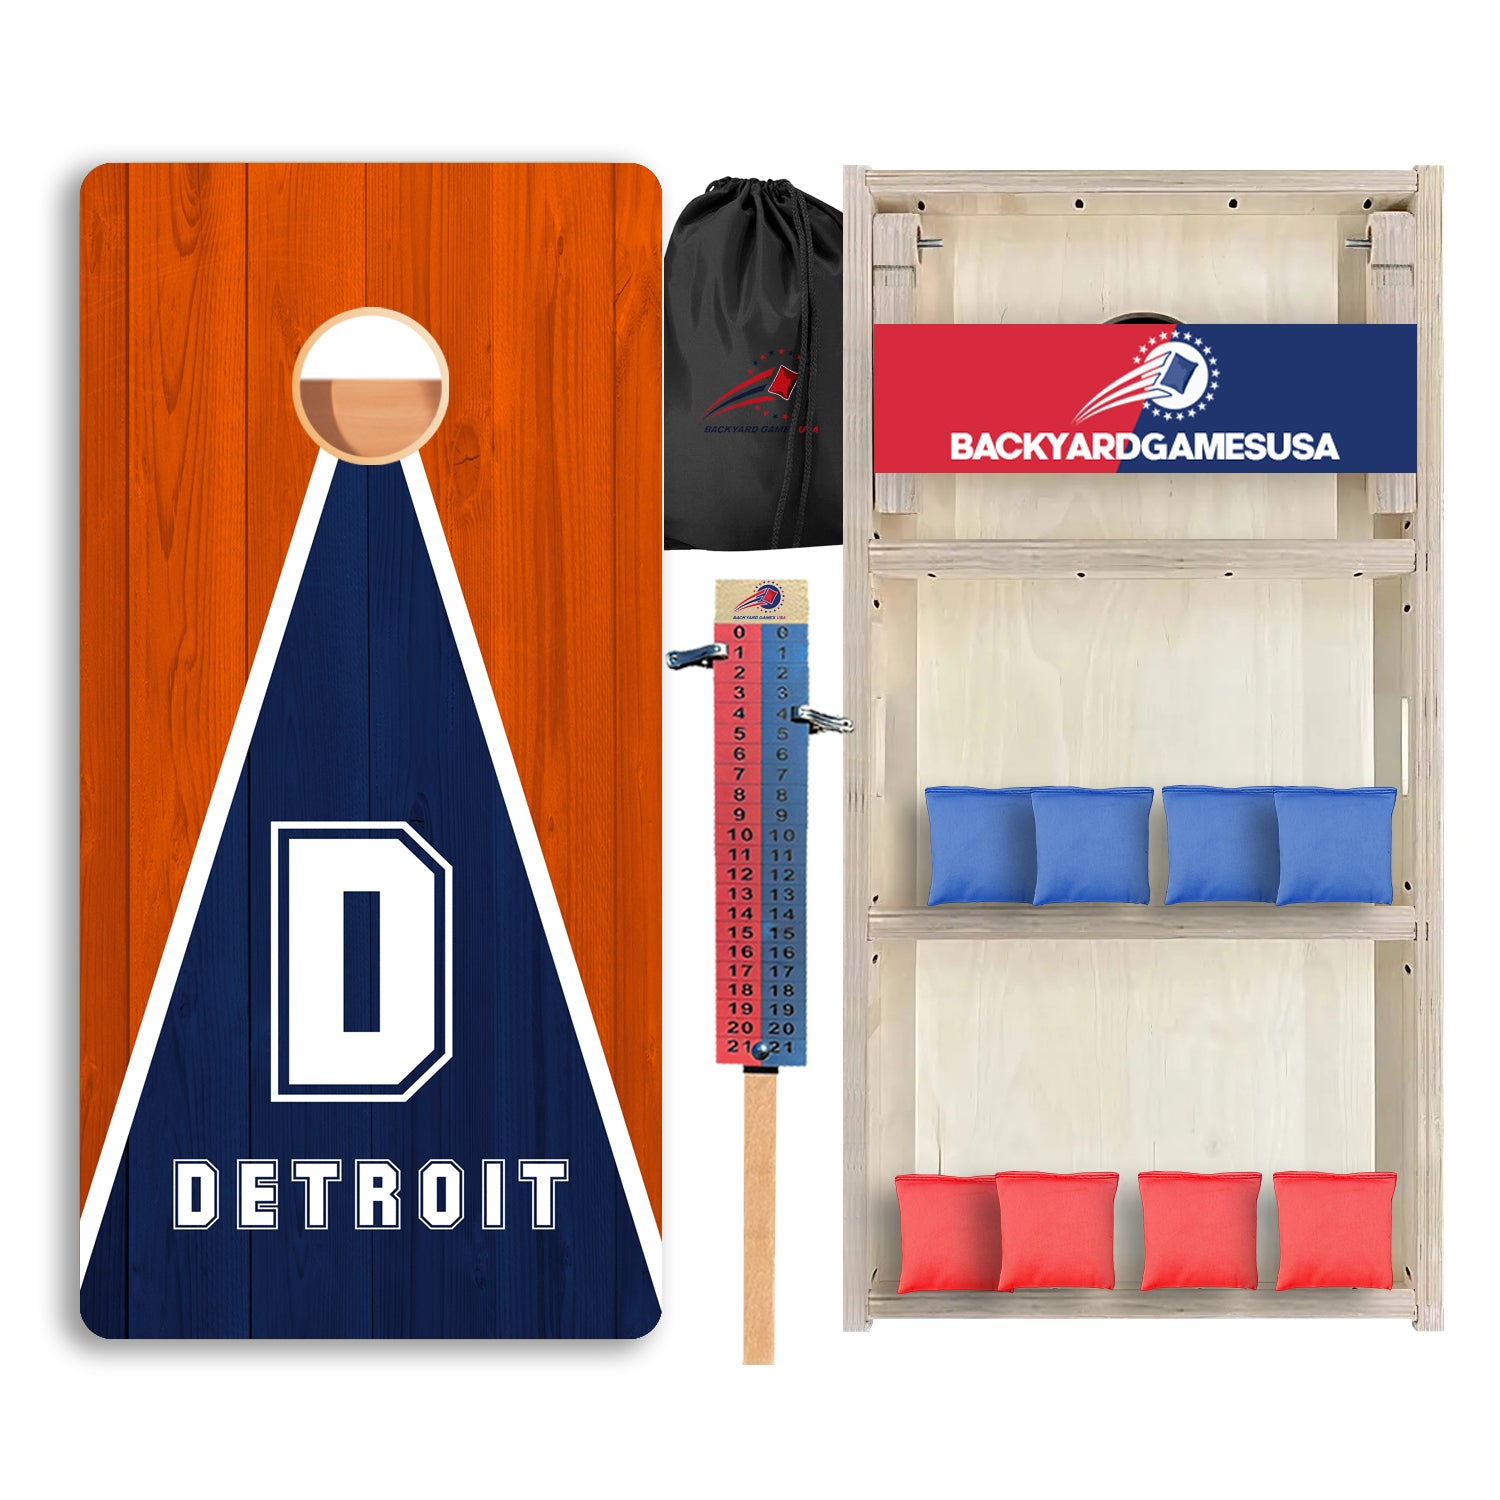 Detroit Baseball Professional Cornhole Boards